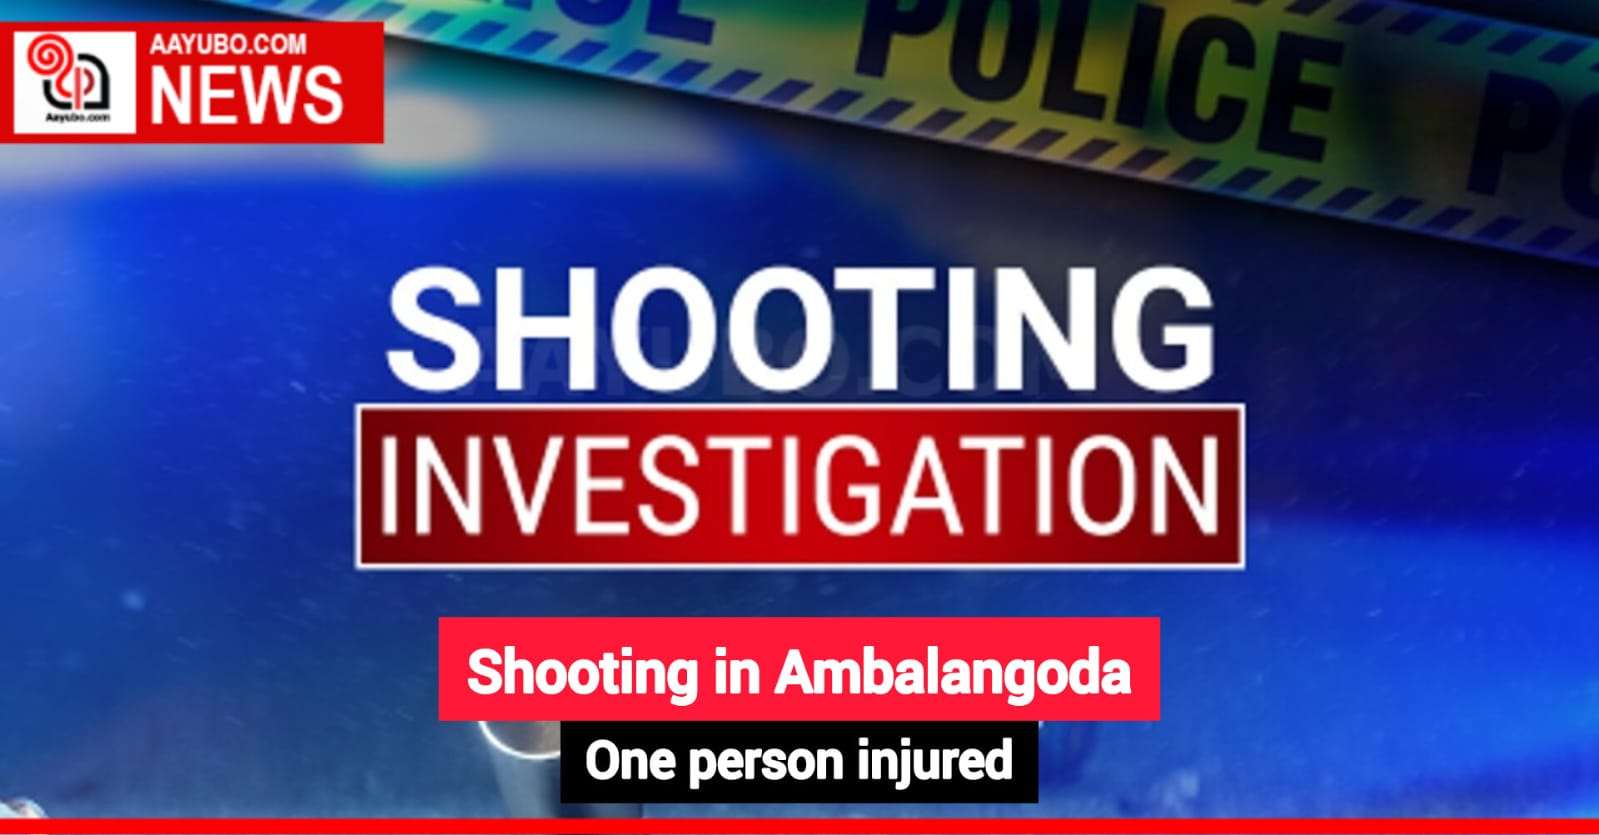 Shooting in Ambalangoda: One person injured